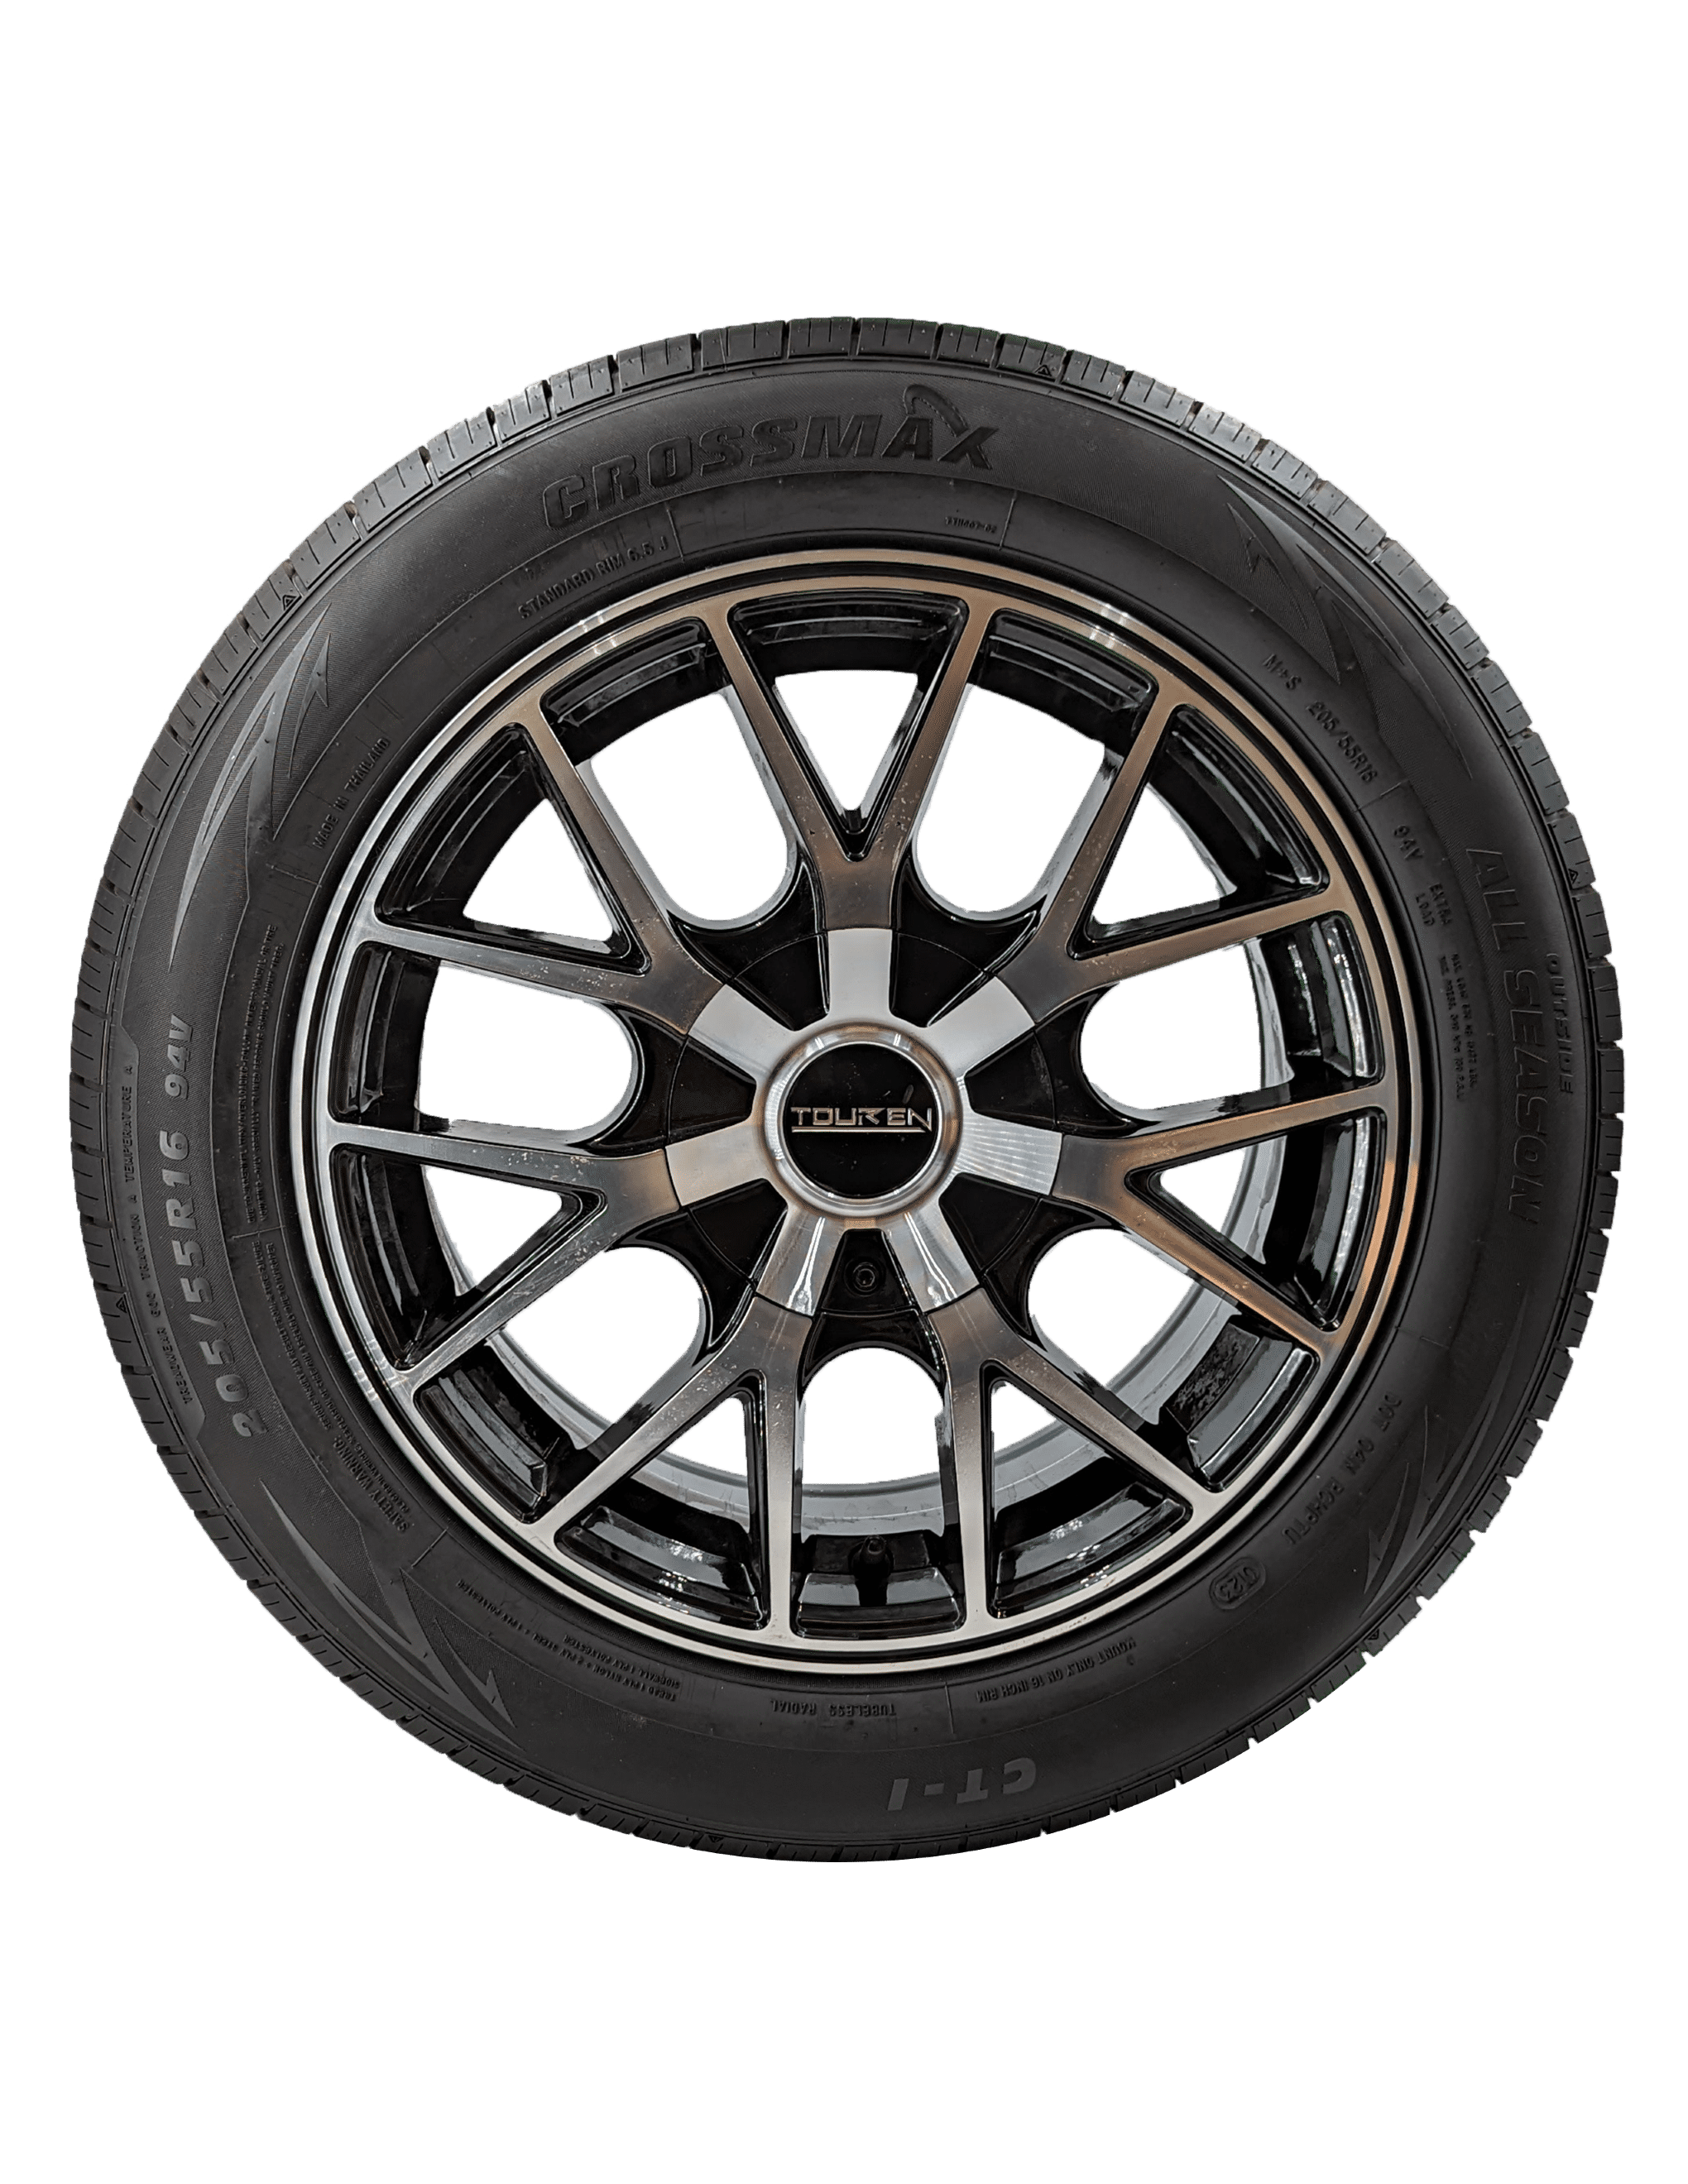 Crossmax 195/65R15 91H CT-1 All-Season Tire